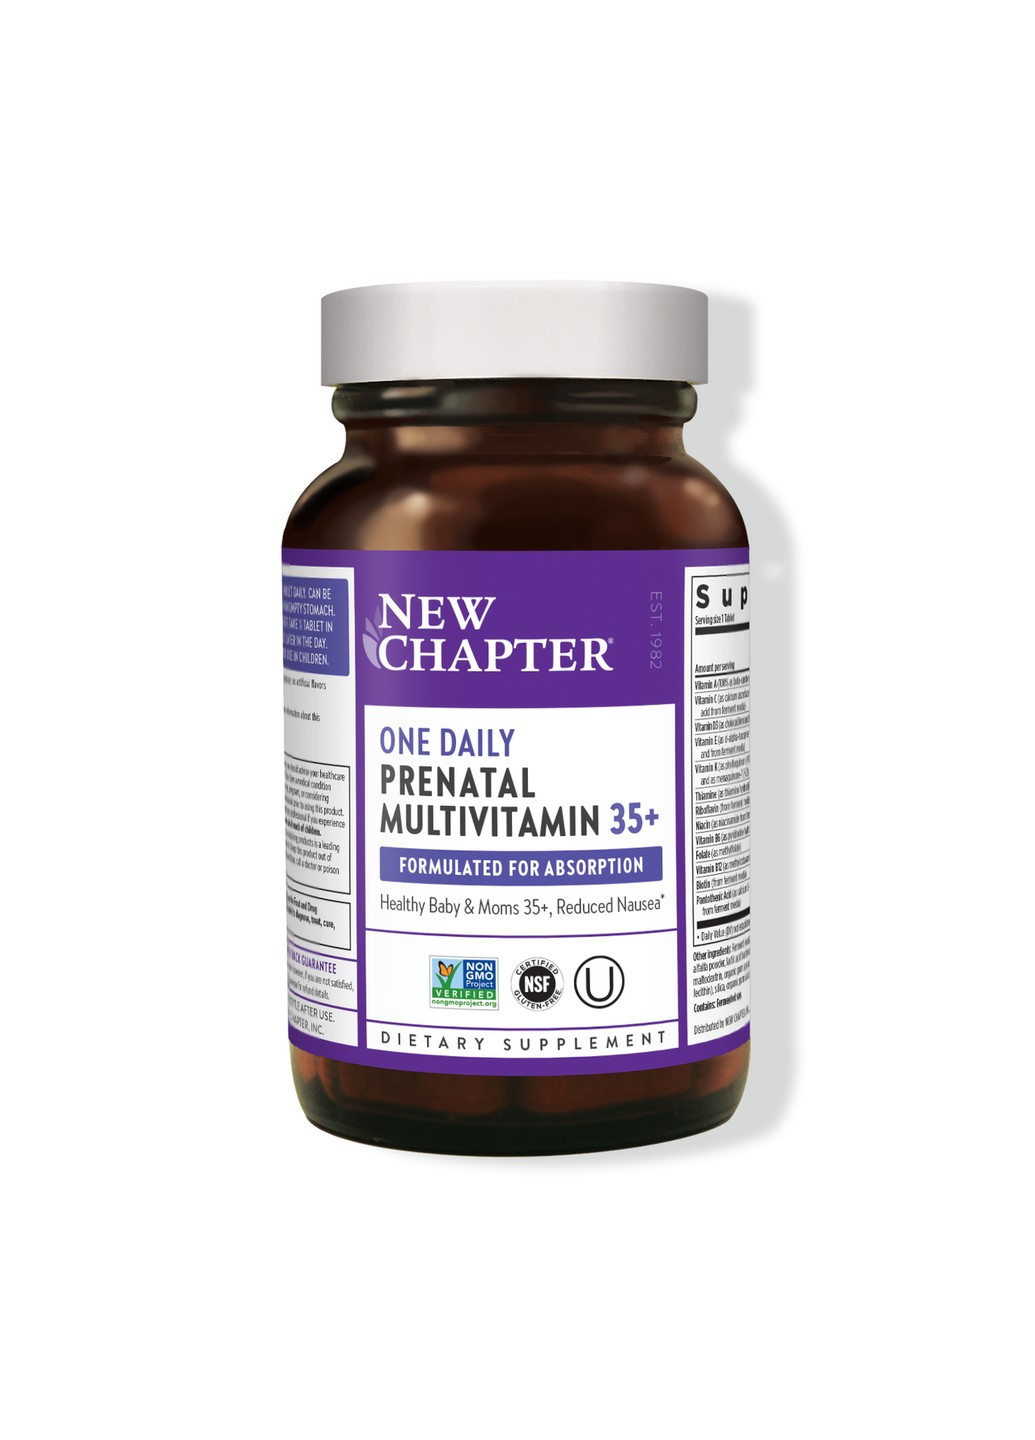 Ежедневные Мультивитамины для беременных, One Daily Prenatal Multivitamin 35+,, 30 таблеток New Chapter (255408993)